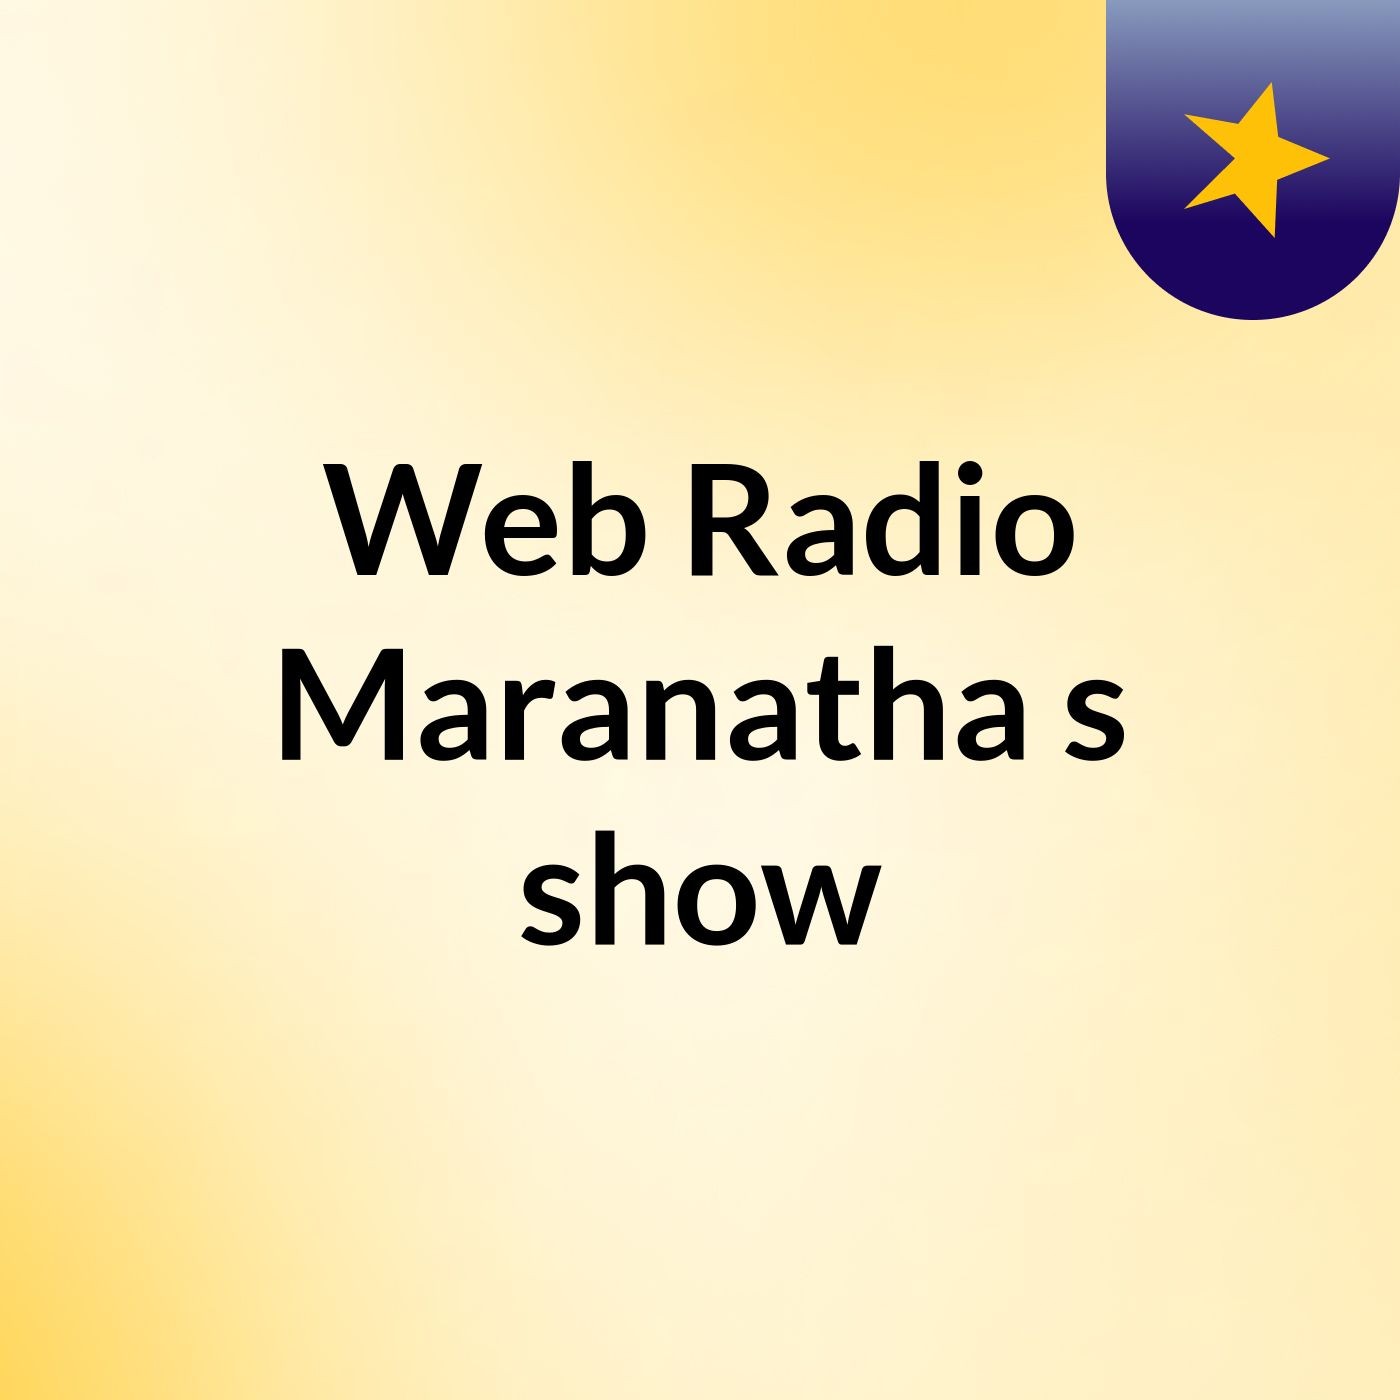 Web Radio Maranatha's show